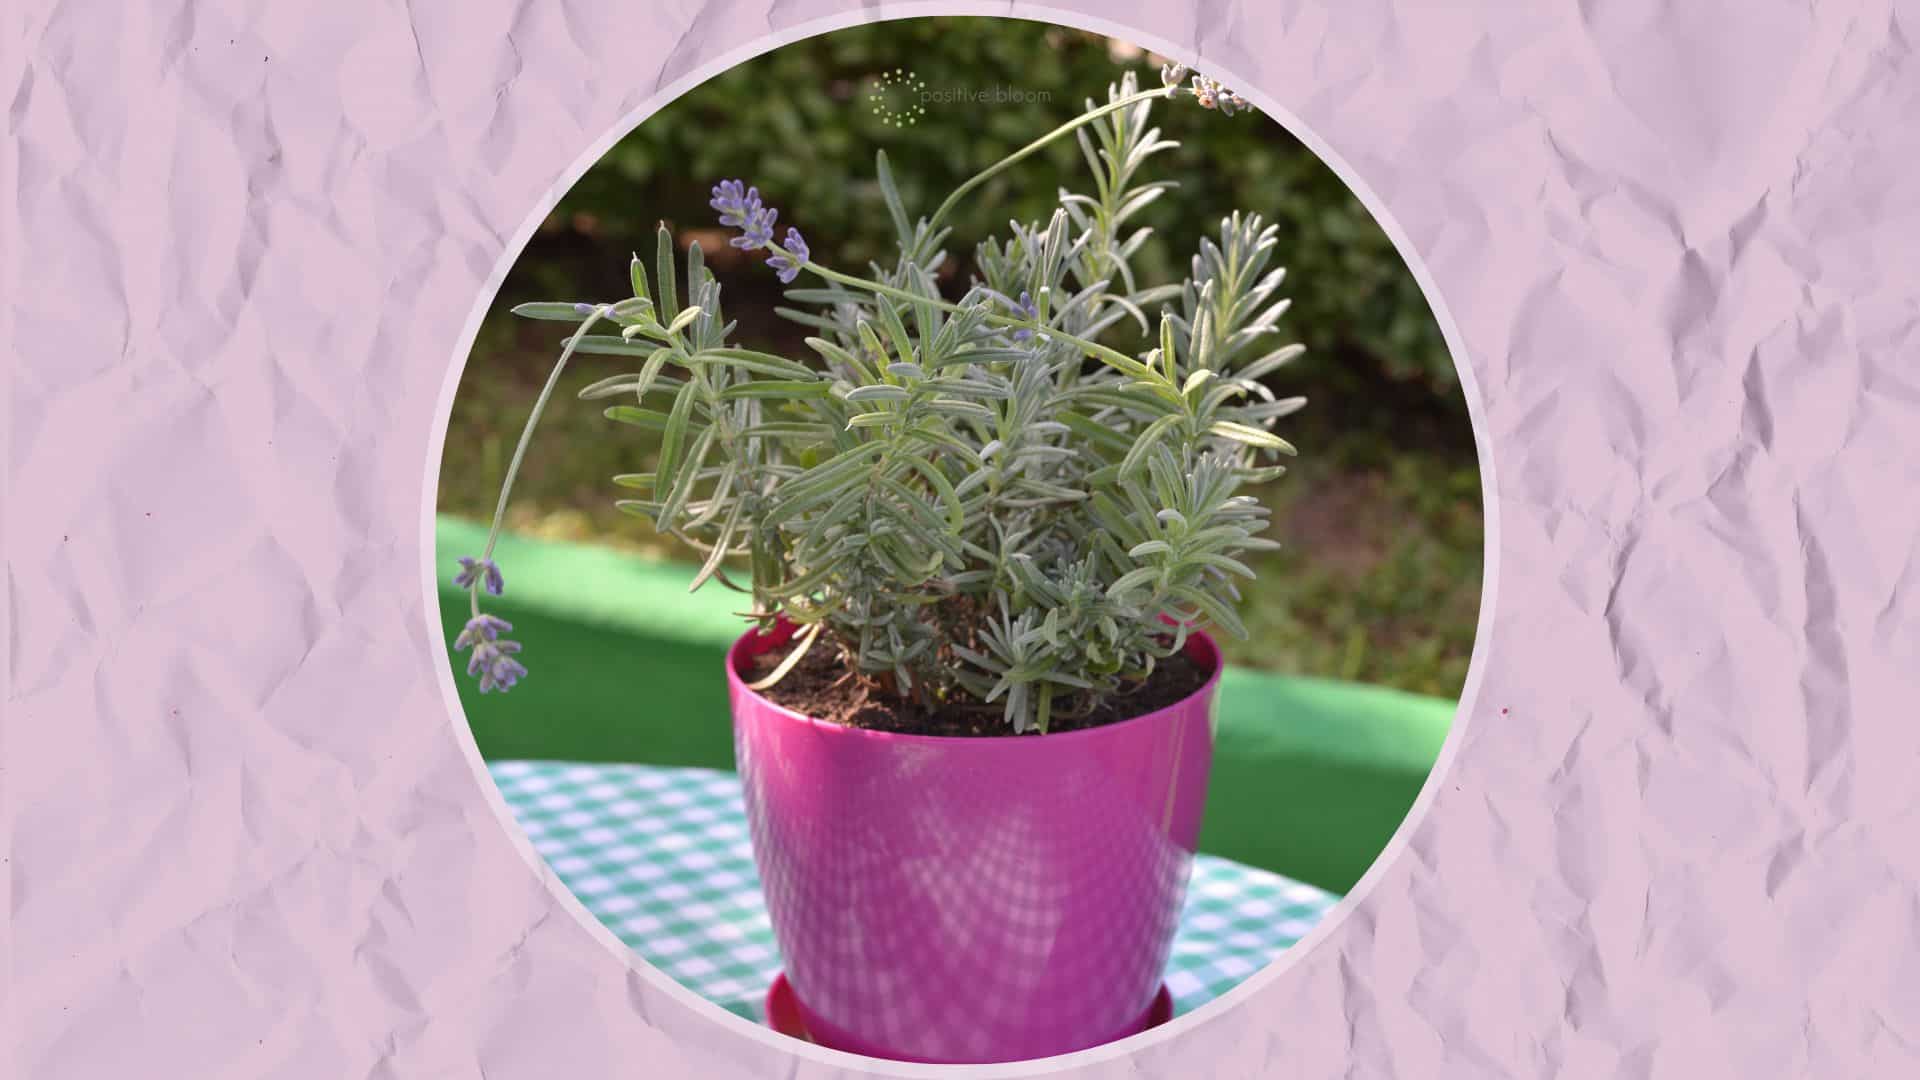 lavender growing in a purple pot